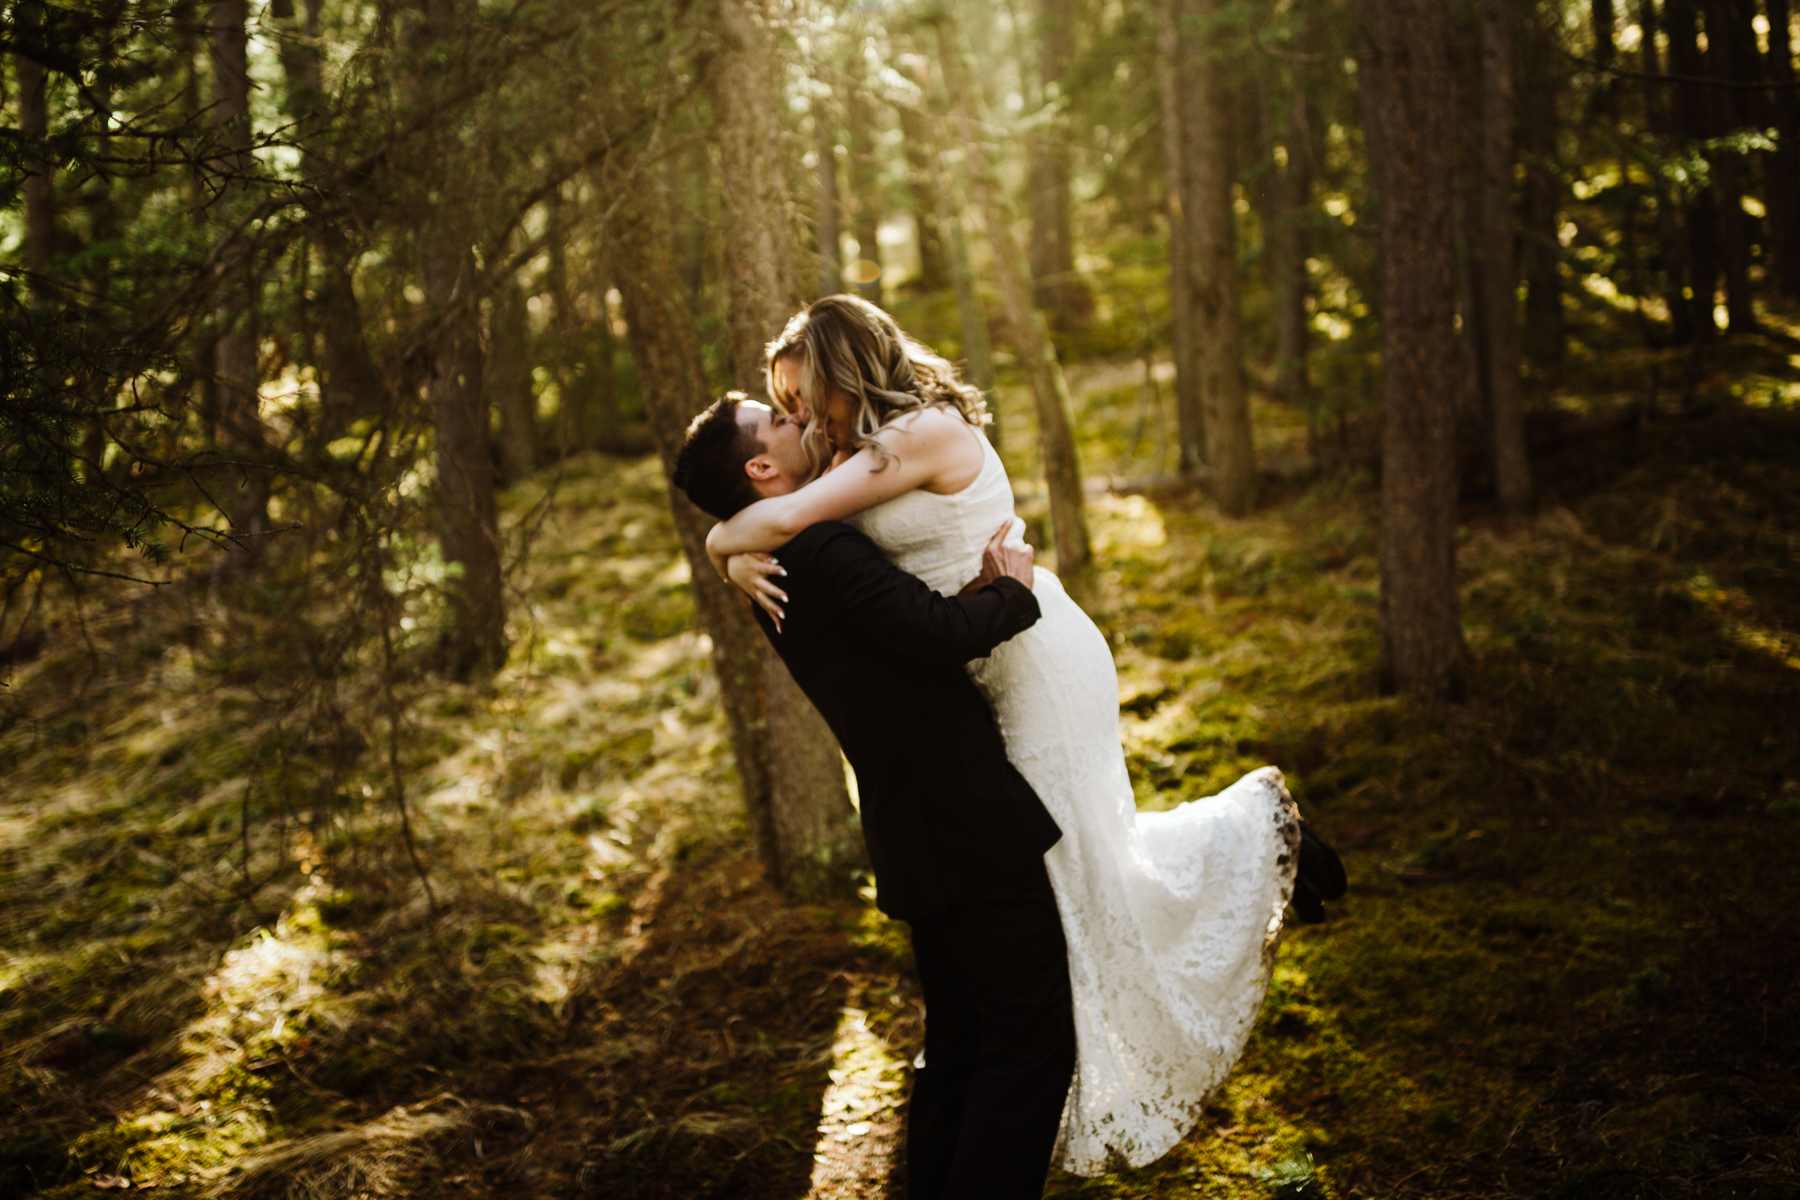 Banff Adventure Wedding Photographers for Lake Minnewanka Elopement - Image 19